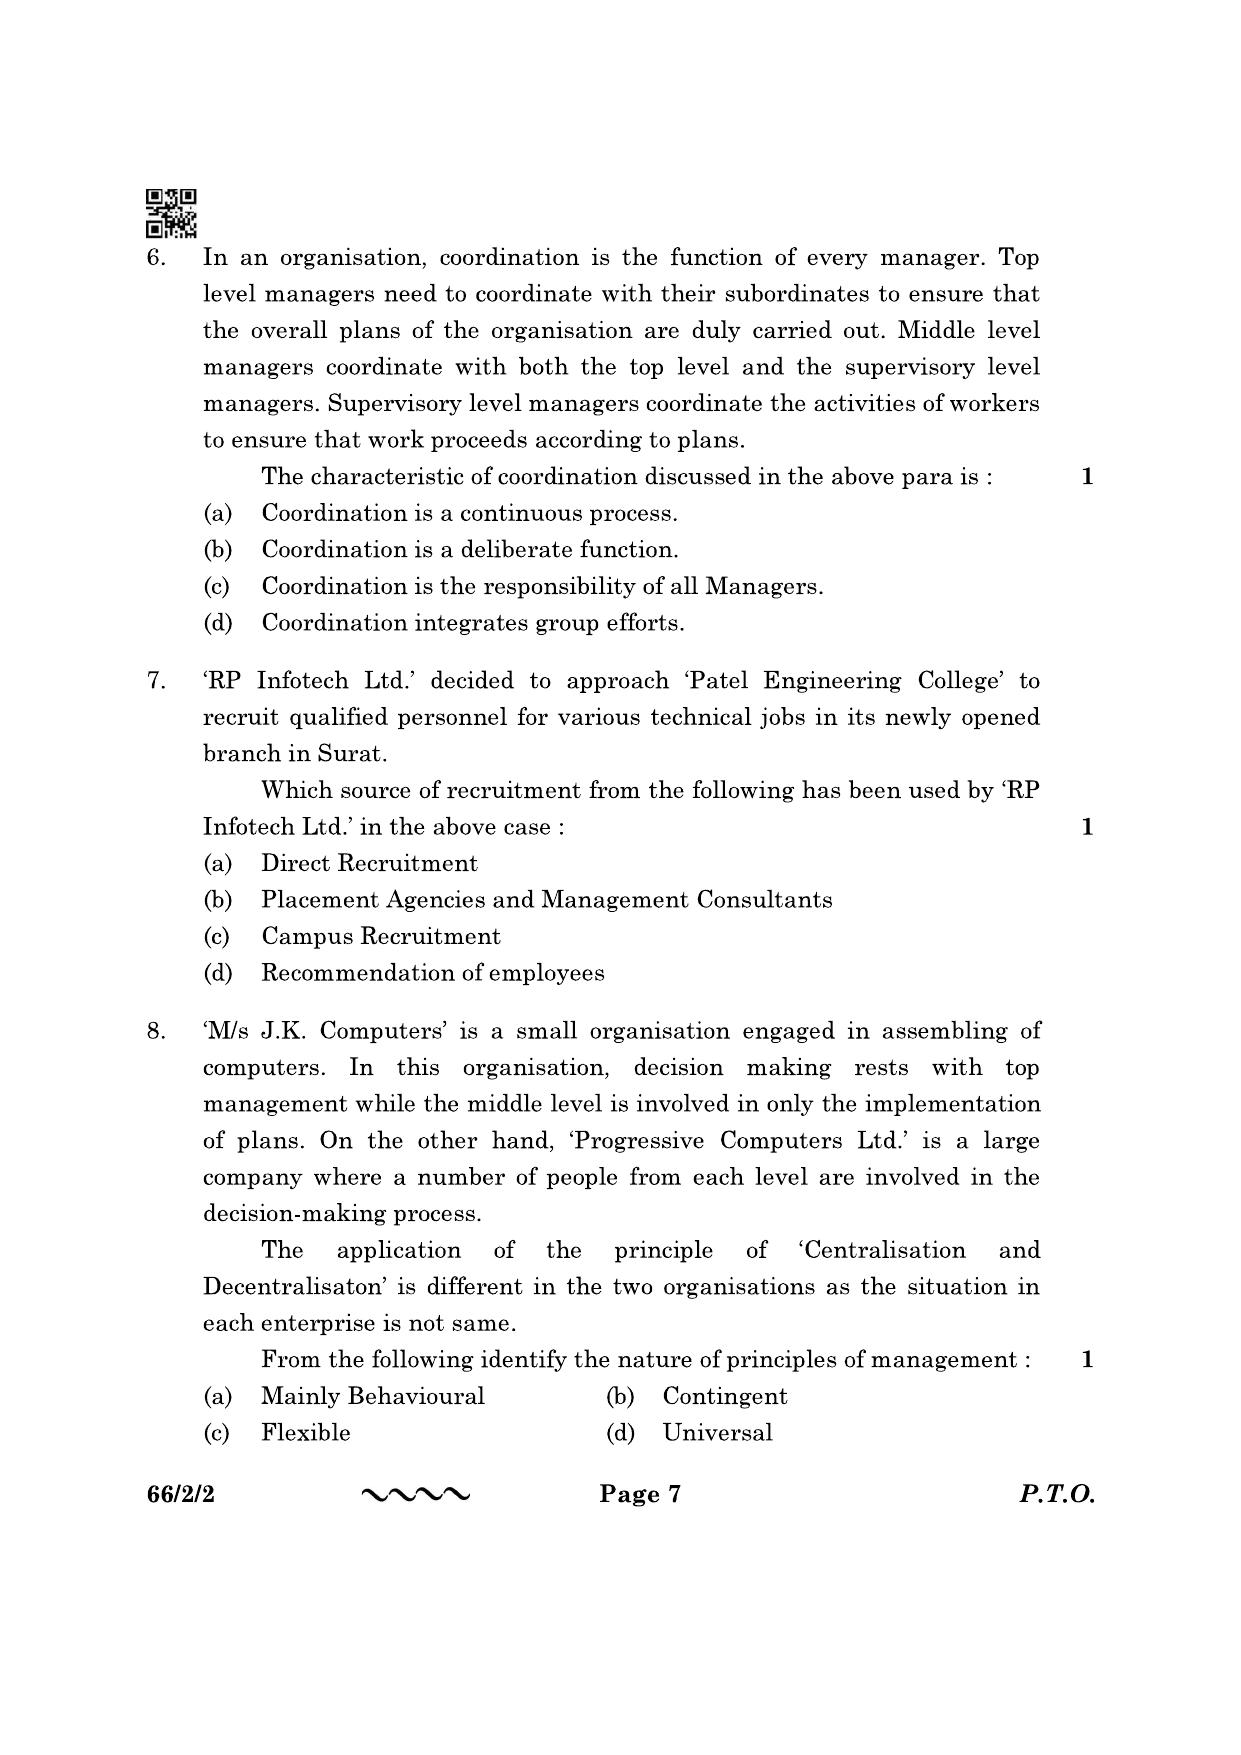 CBSE Class 12 66-2-2 Business Studies 2023 Question Paper - Page 7